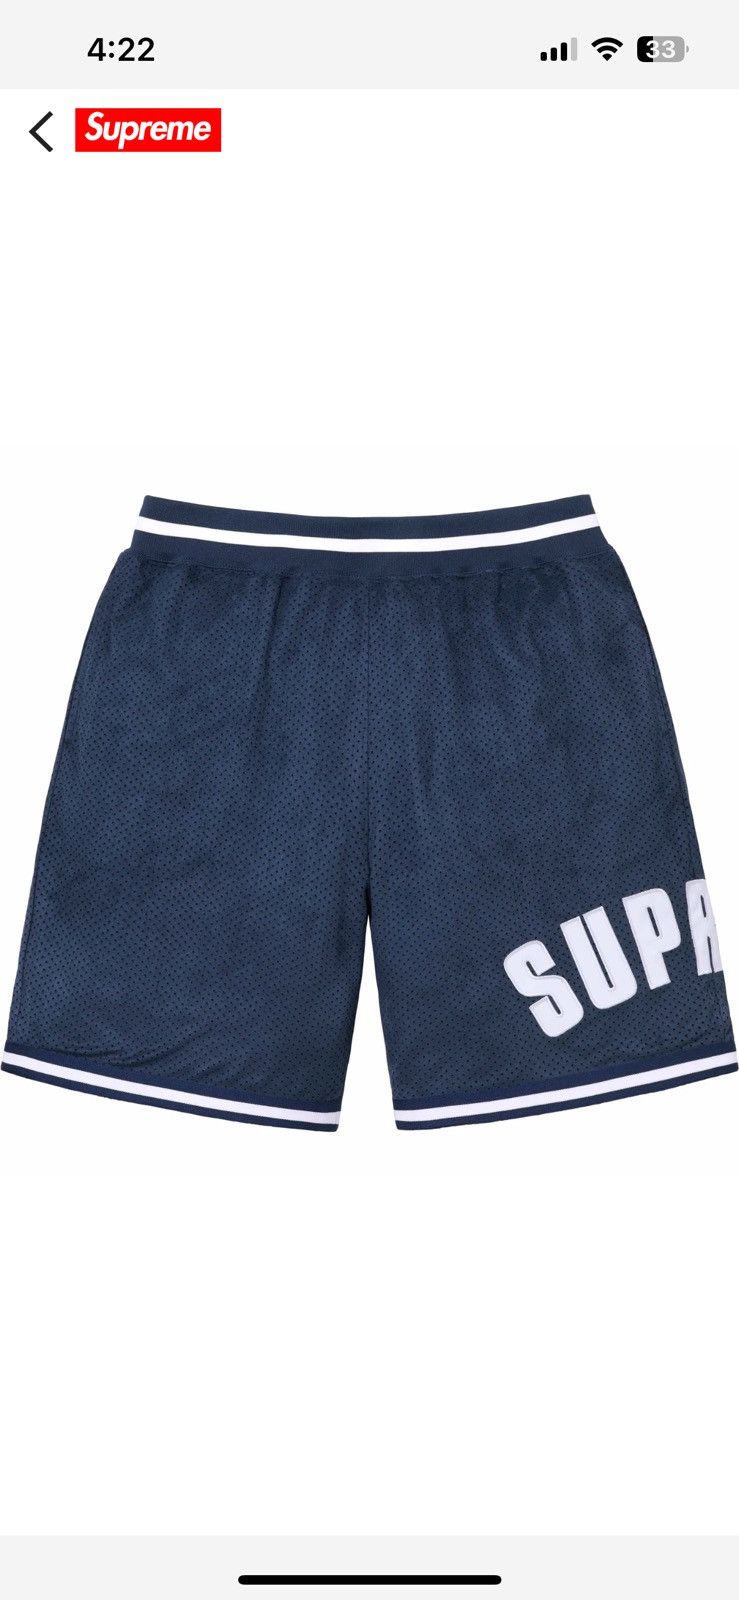 Supreme Supreme Ultrasuede Mesh Shorts | Grailed